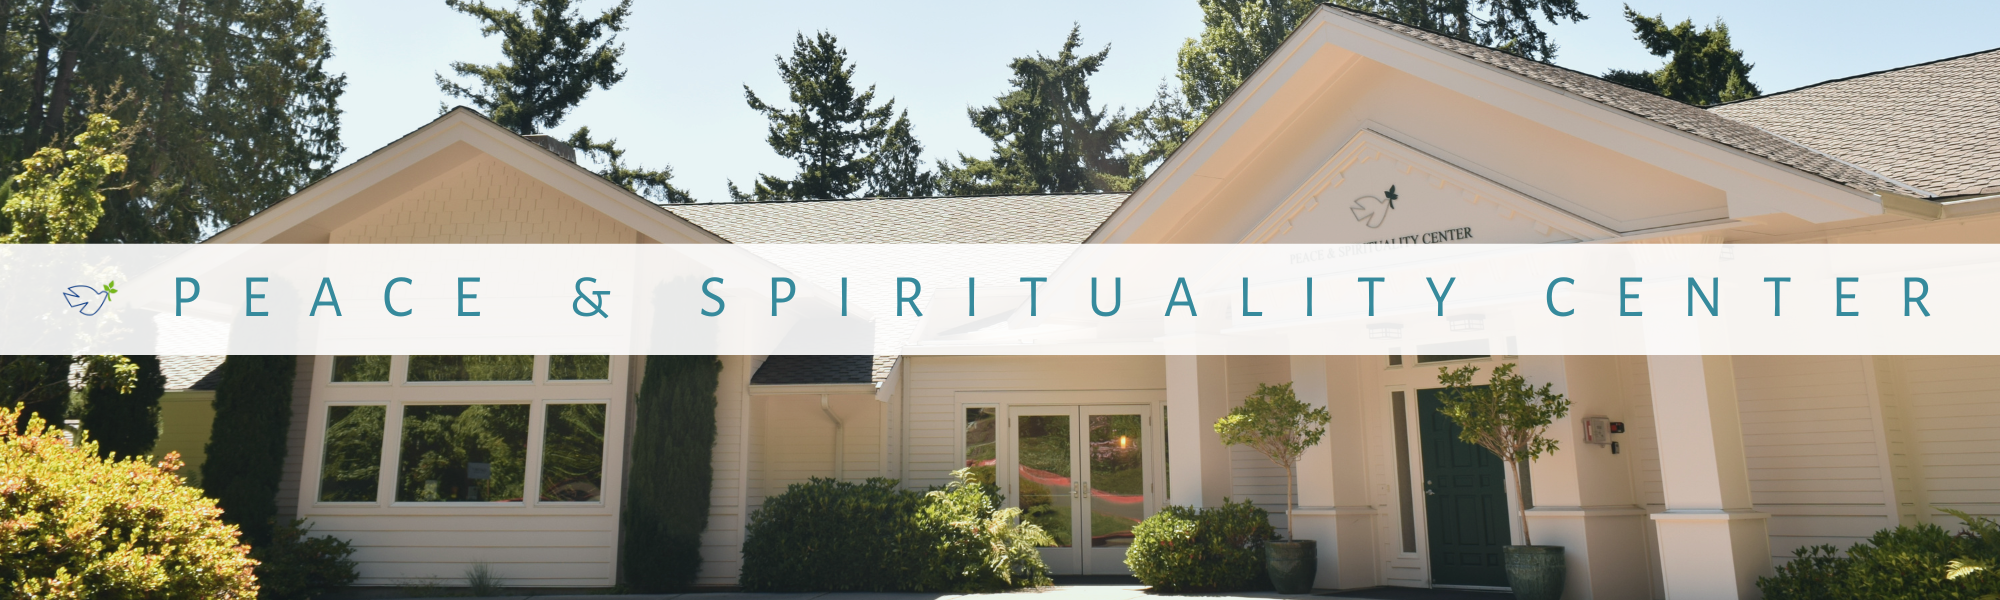 Peace & Spirituality Center